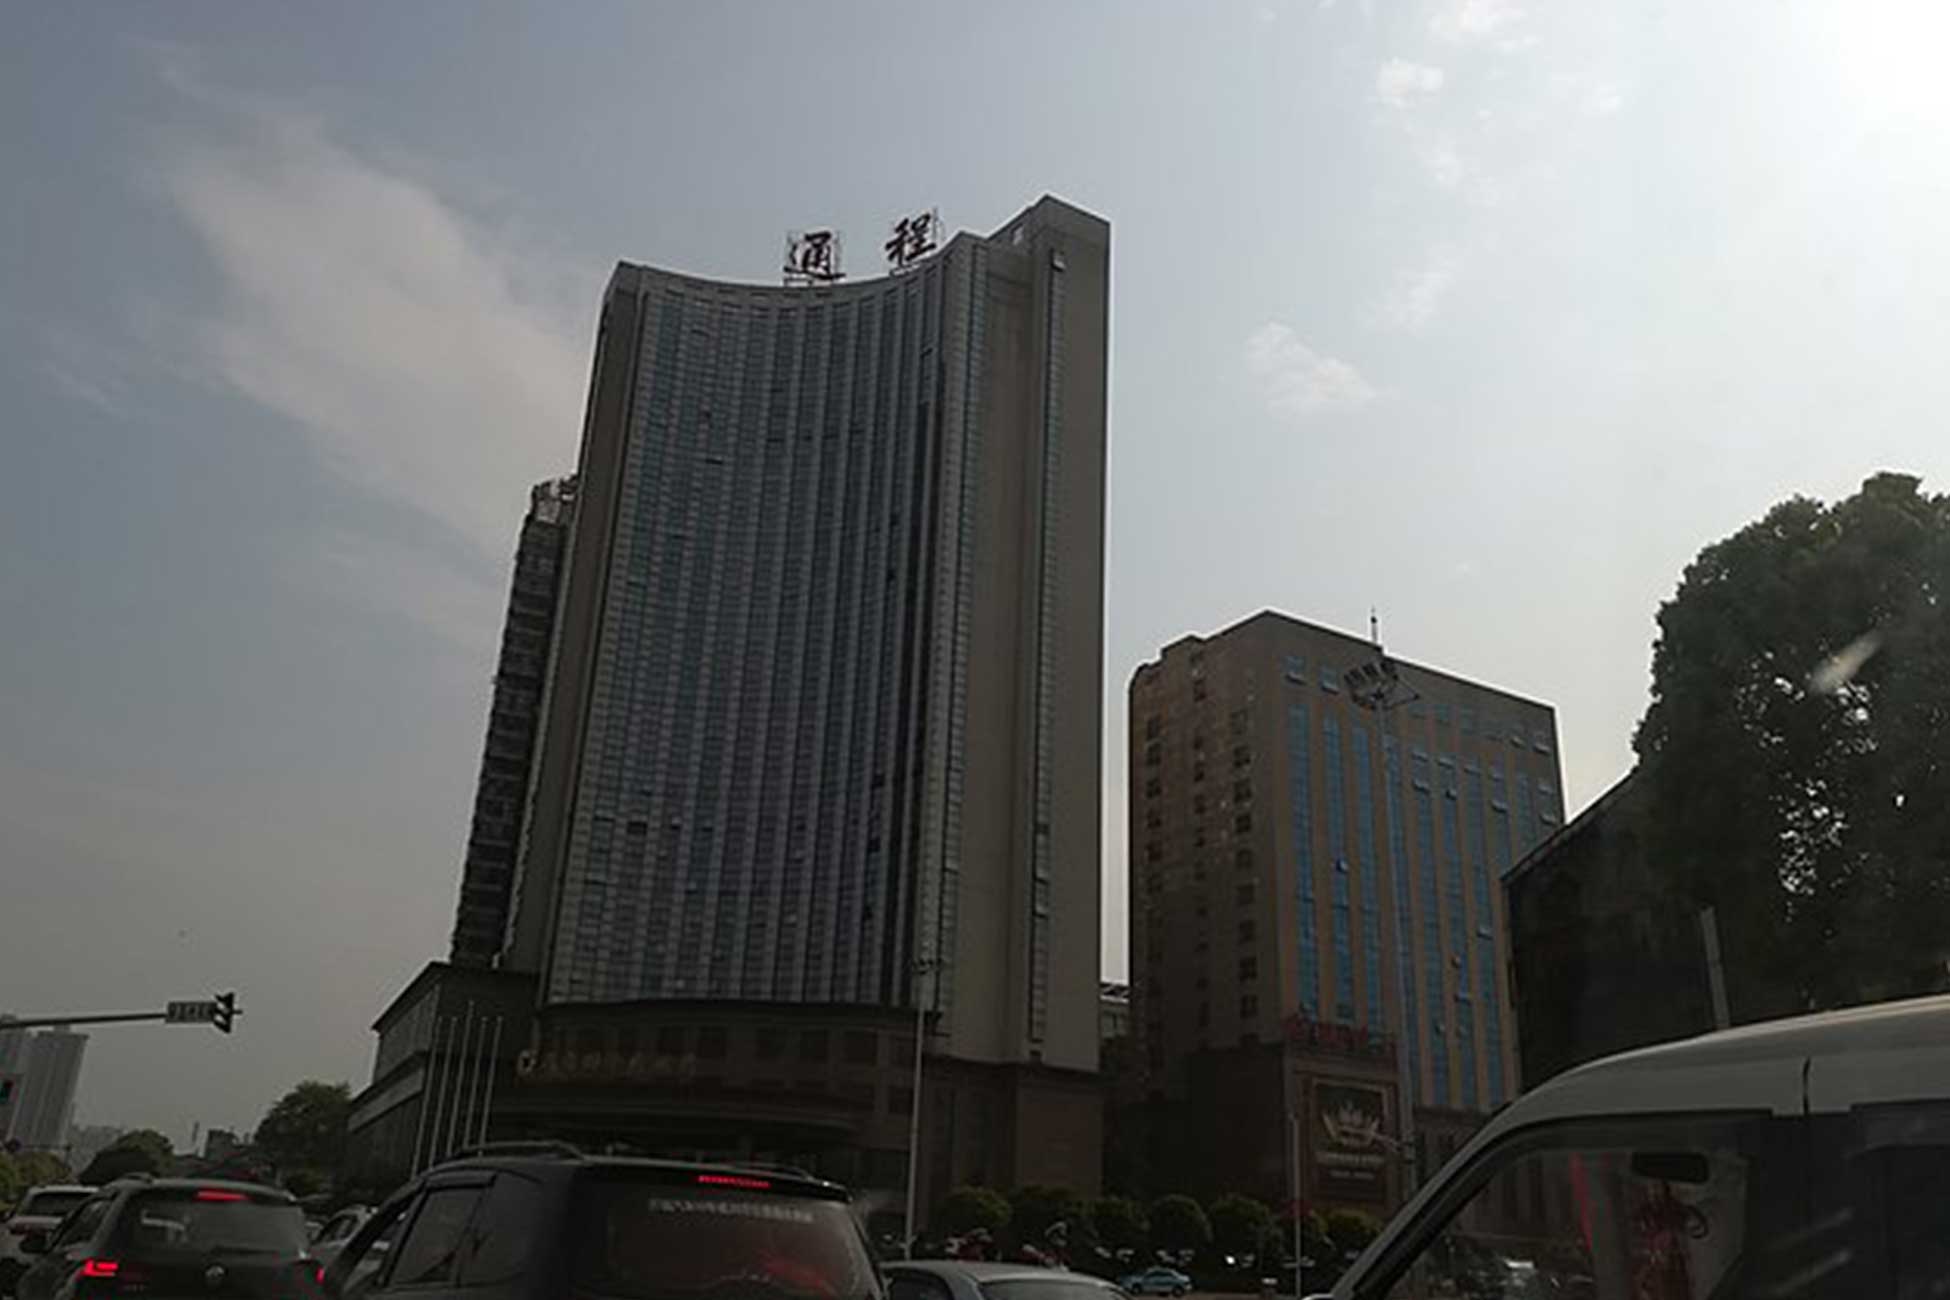 Open a bank account in Tongcheng